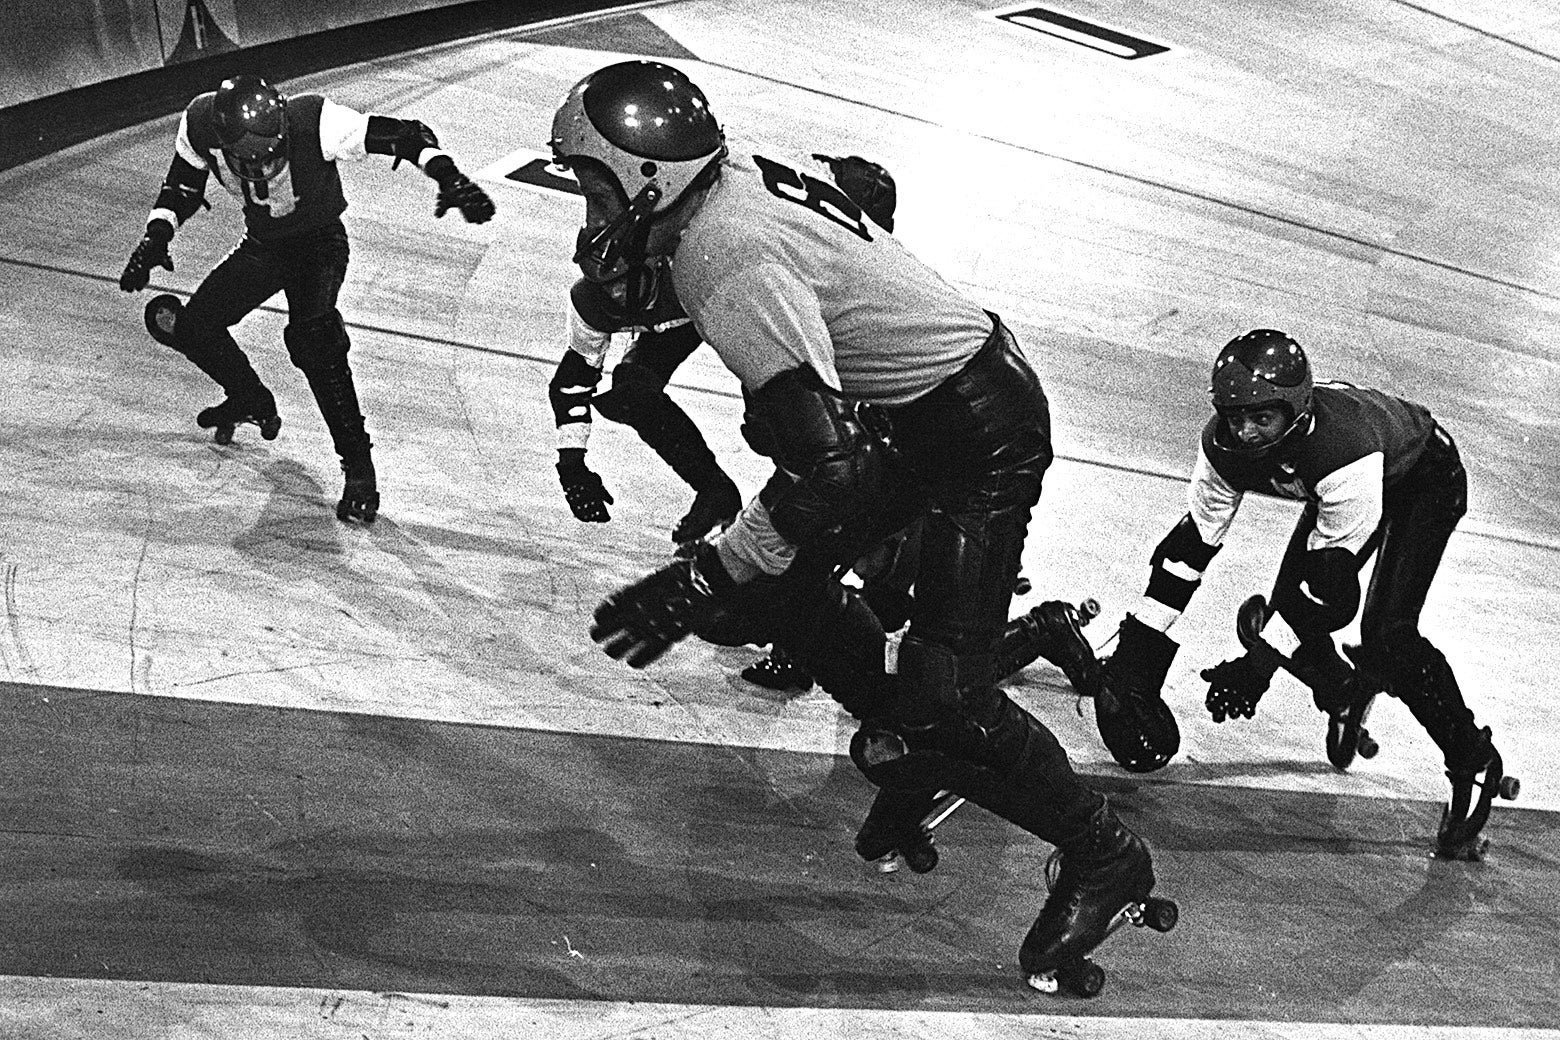 Men chase each other in roller skates.